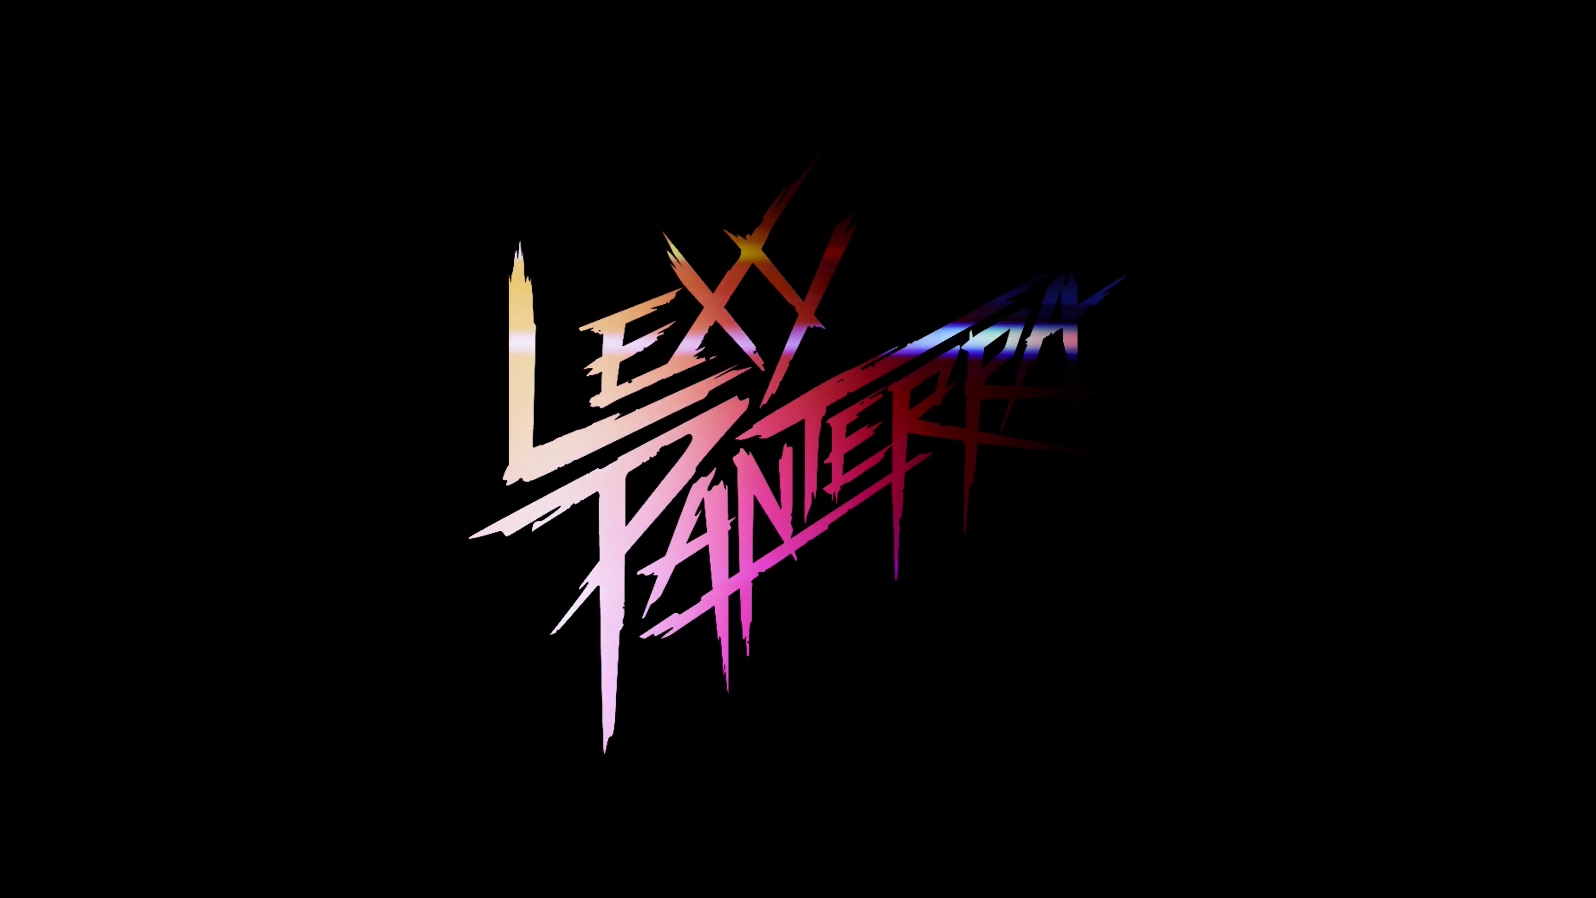 Lexy Panterra - Used to Know (Twe